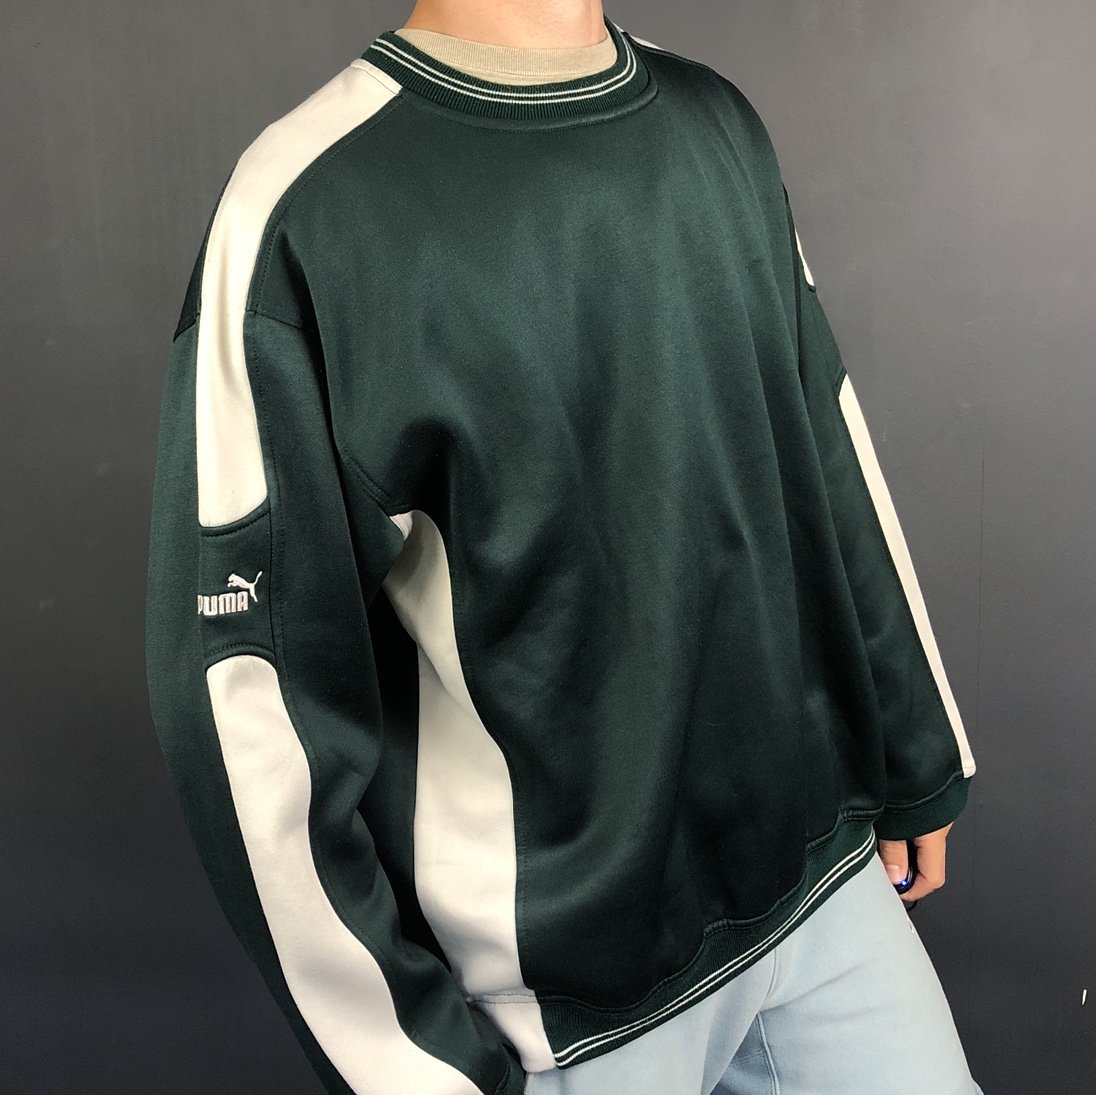 Vintage Puma Sweatshirt in Green & Cream - Vintique Clothing